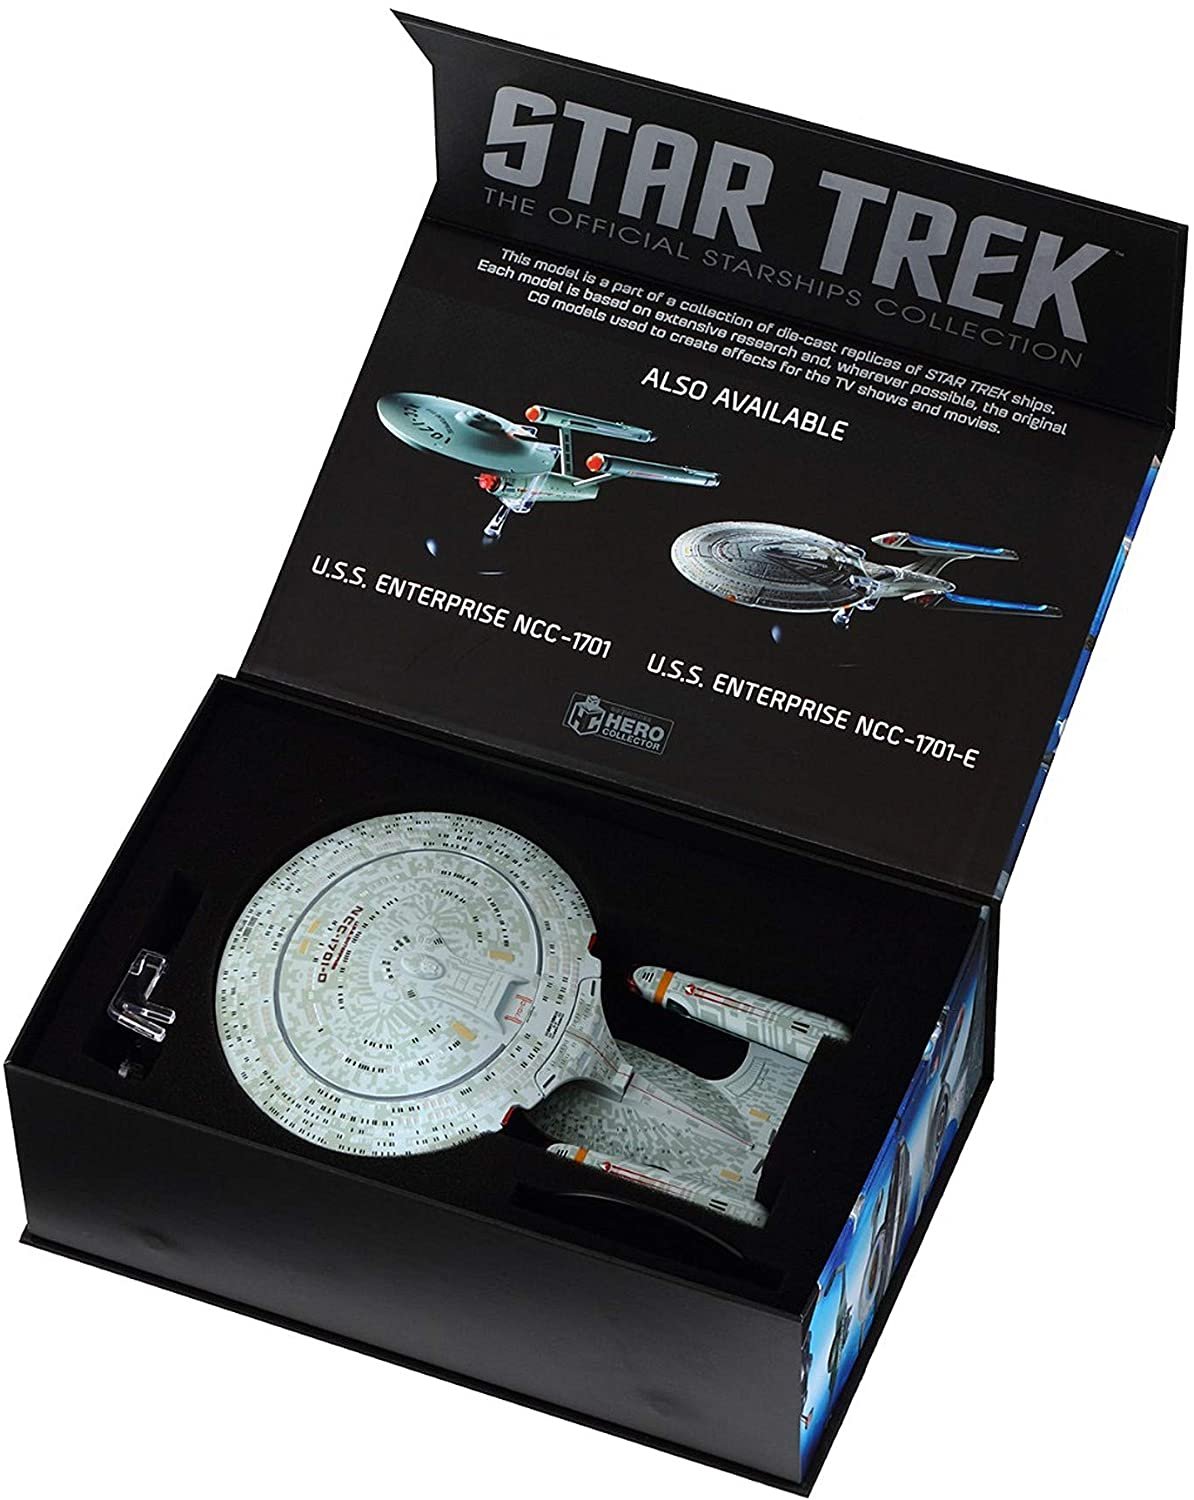 Star Trek The Next Generation U.S.S. Enterprise NCC-1701-D XL Edition